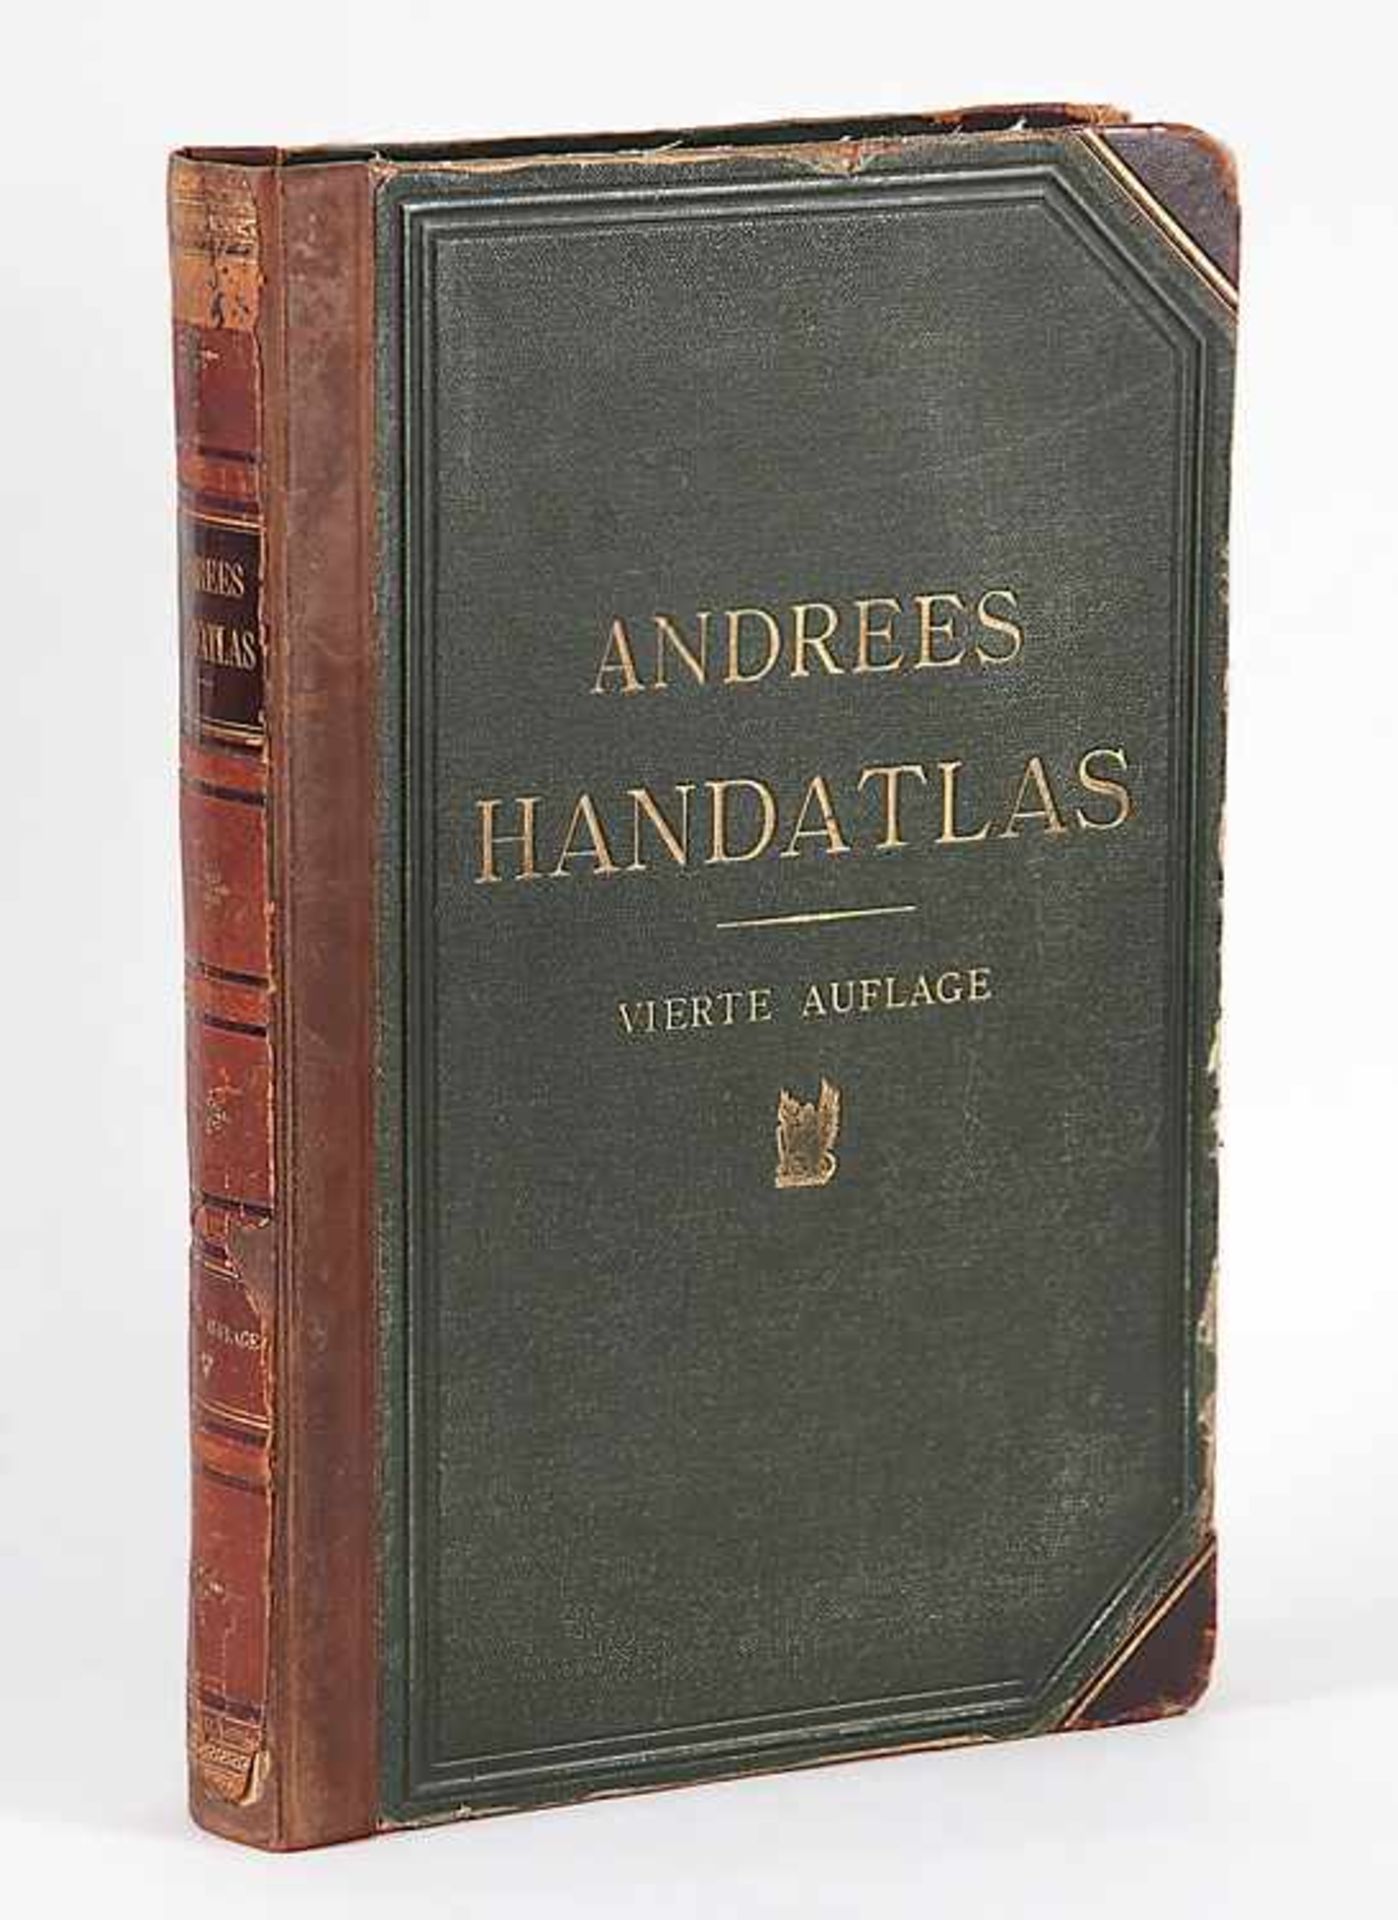 Scobel, A.Andrees Allgemeiner Handatlas. Verlag Velhagen & Klasing, Bielefeld/Leipzig 1901.